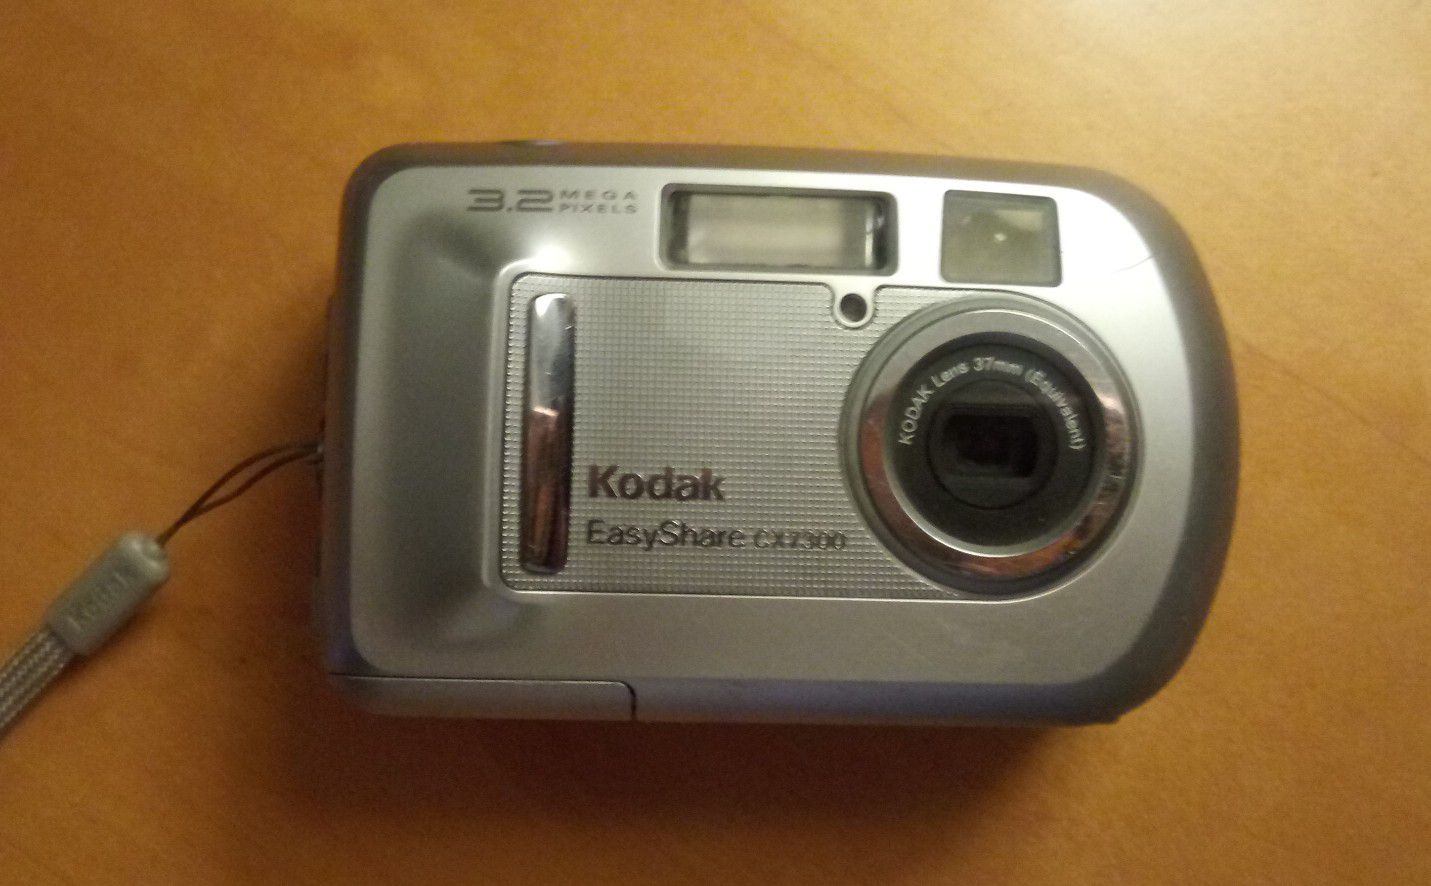 Kodak CX7300 3.2 MP Digital Camera